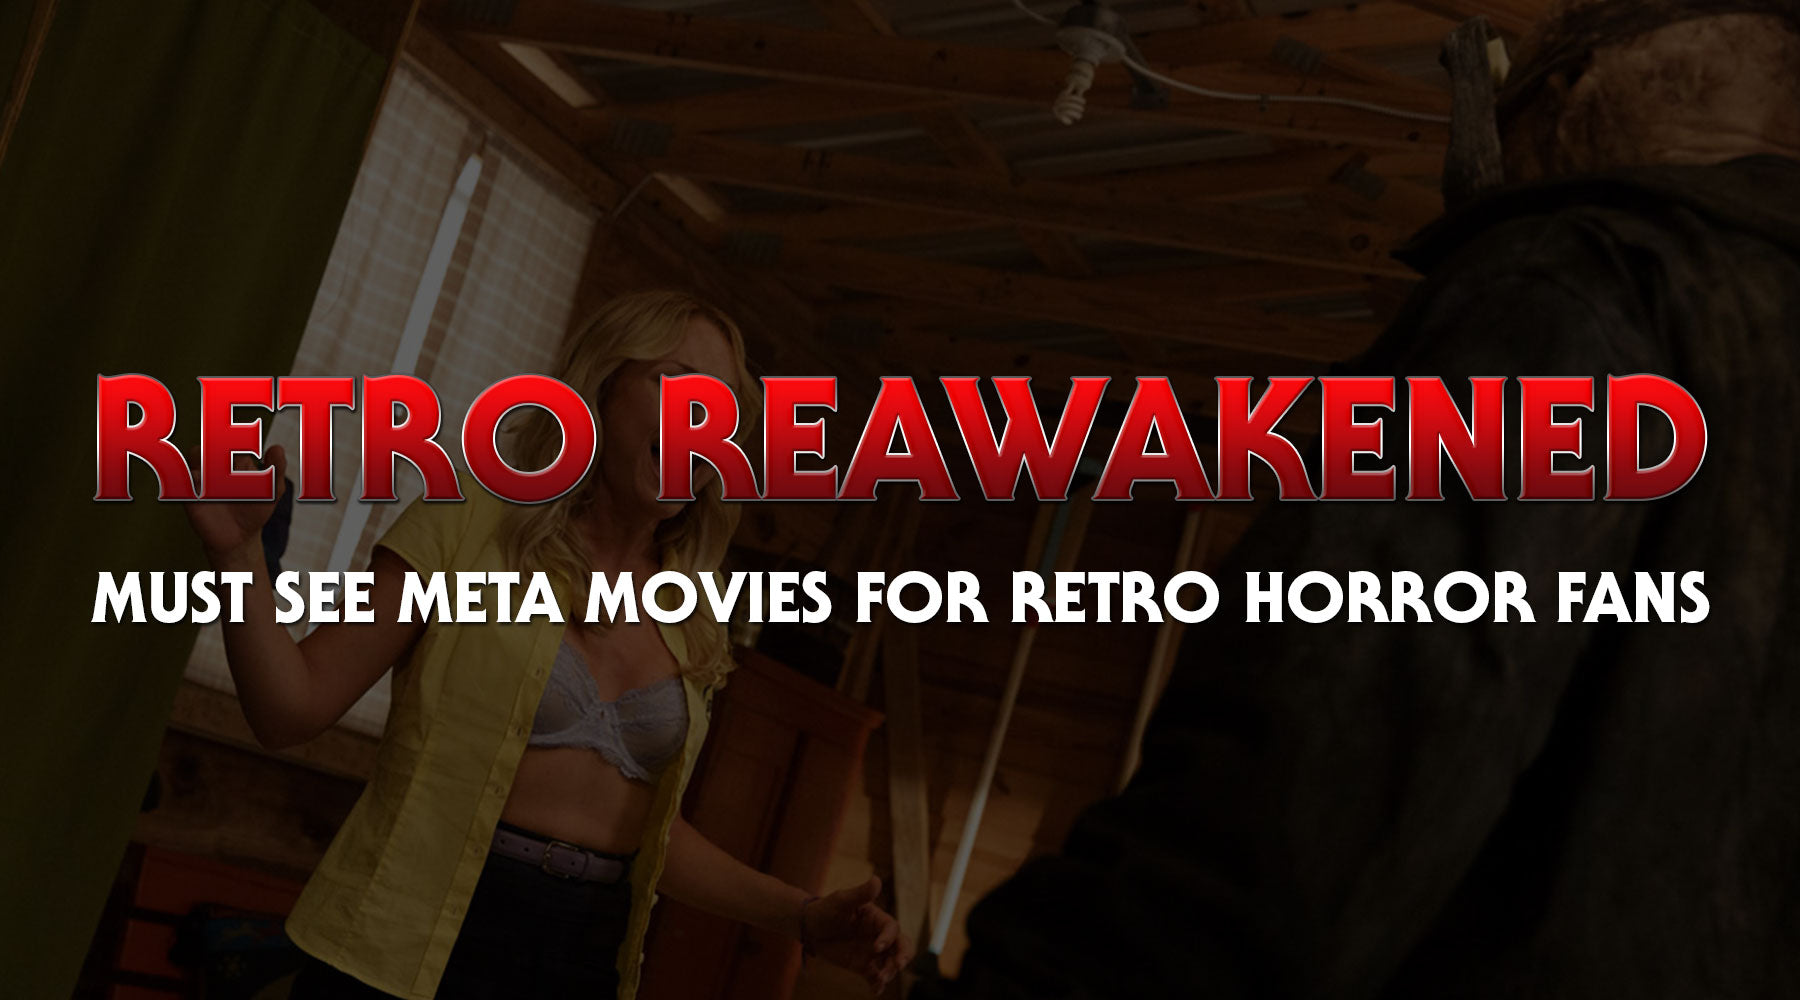 Retro Reawakened: Must See Meta Movies for Retro Horror Fans